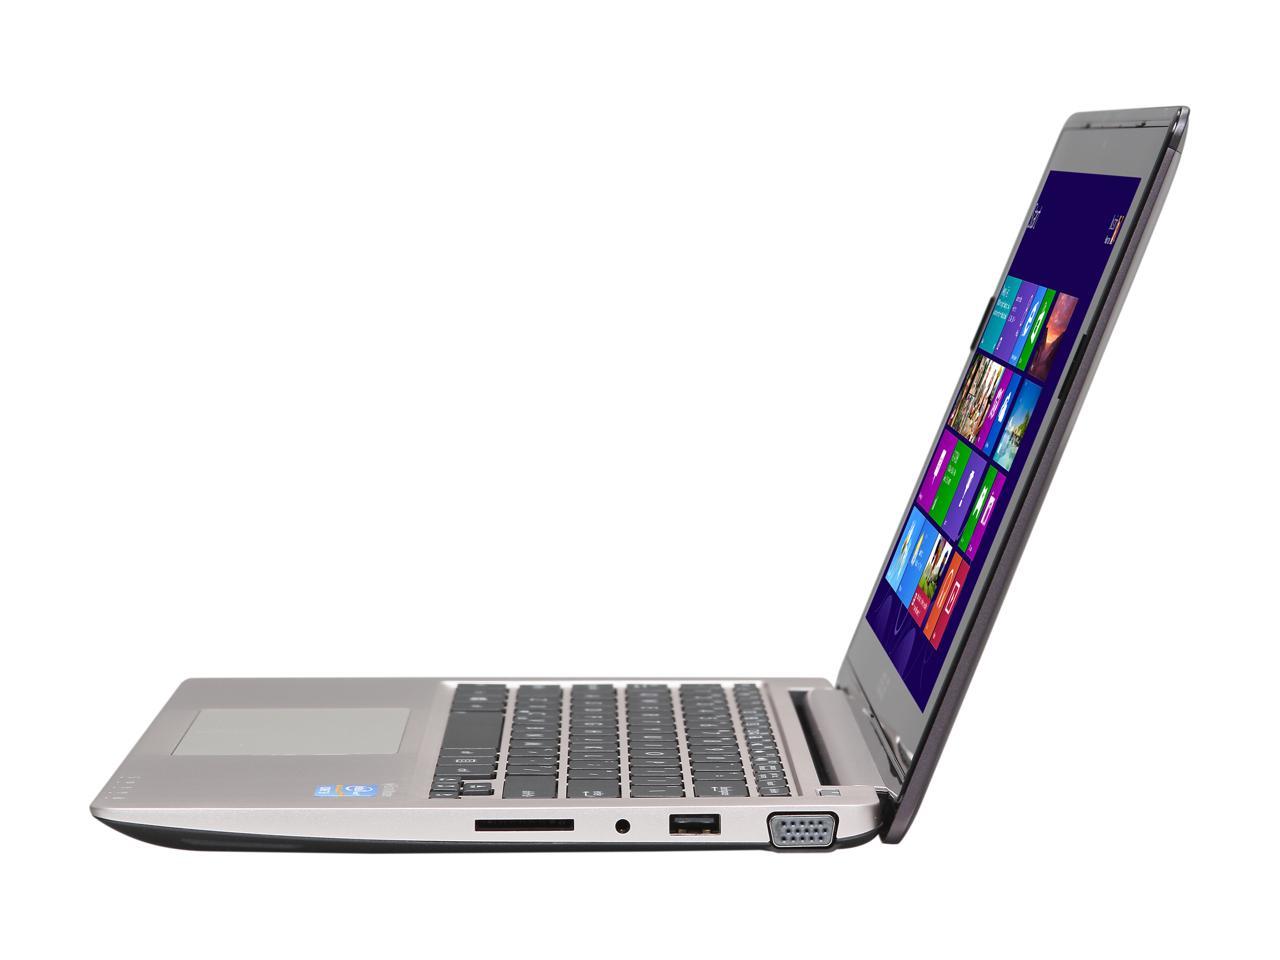 ASUS Laptop VivoBook X202E-DH31T Intel Core i3 3rd Gen 3217U (1.80 